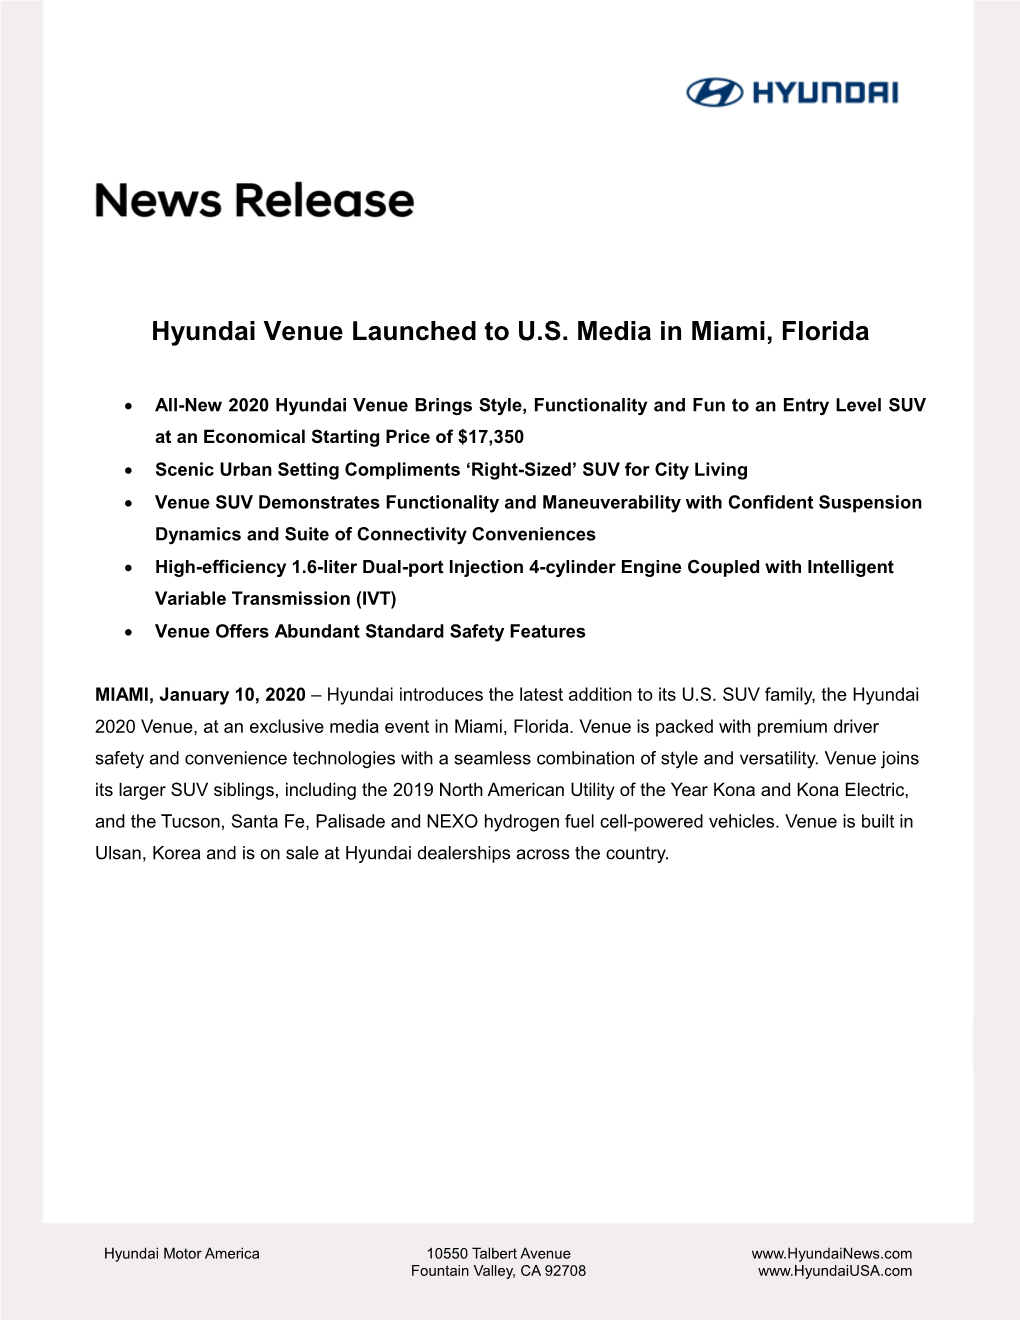 Hyundai Venue Launched to U.S. Media in Miami, Florida